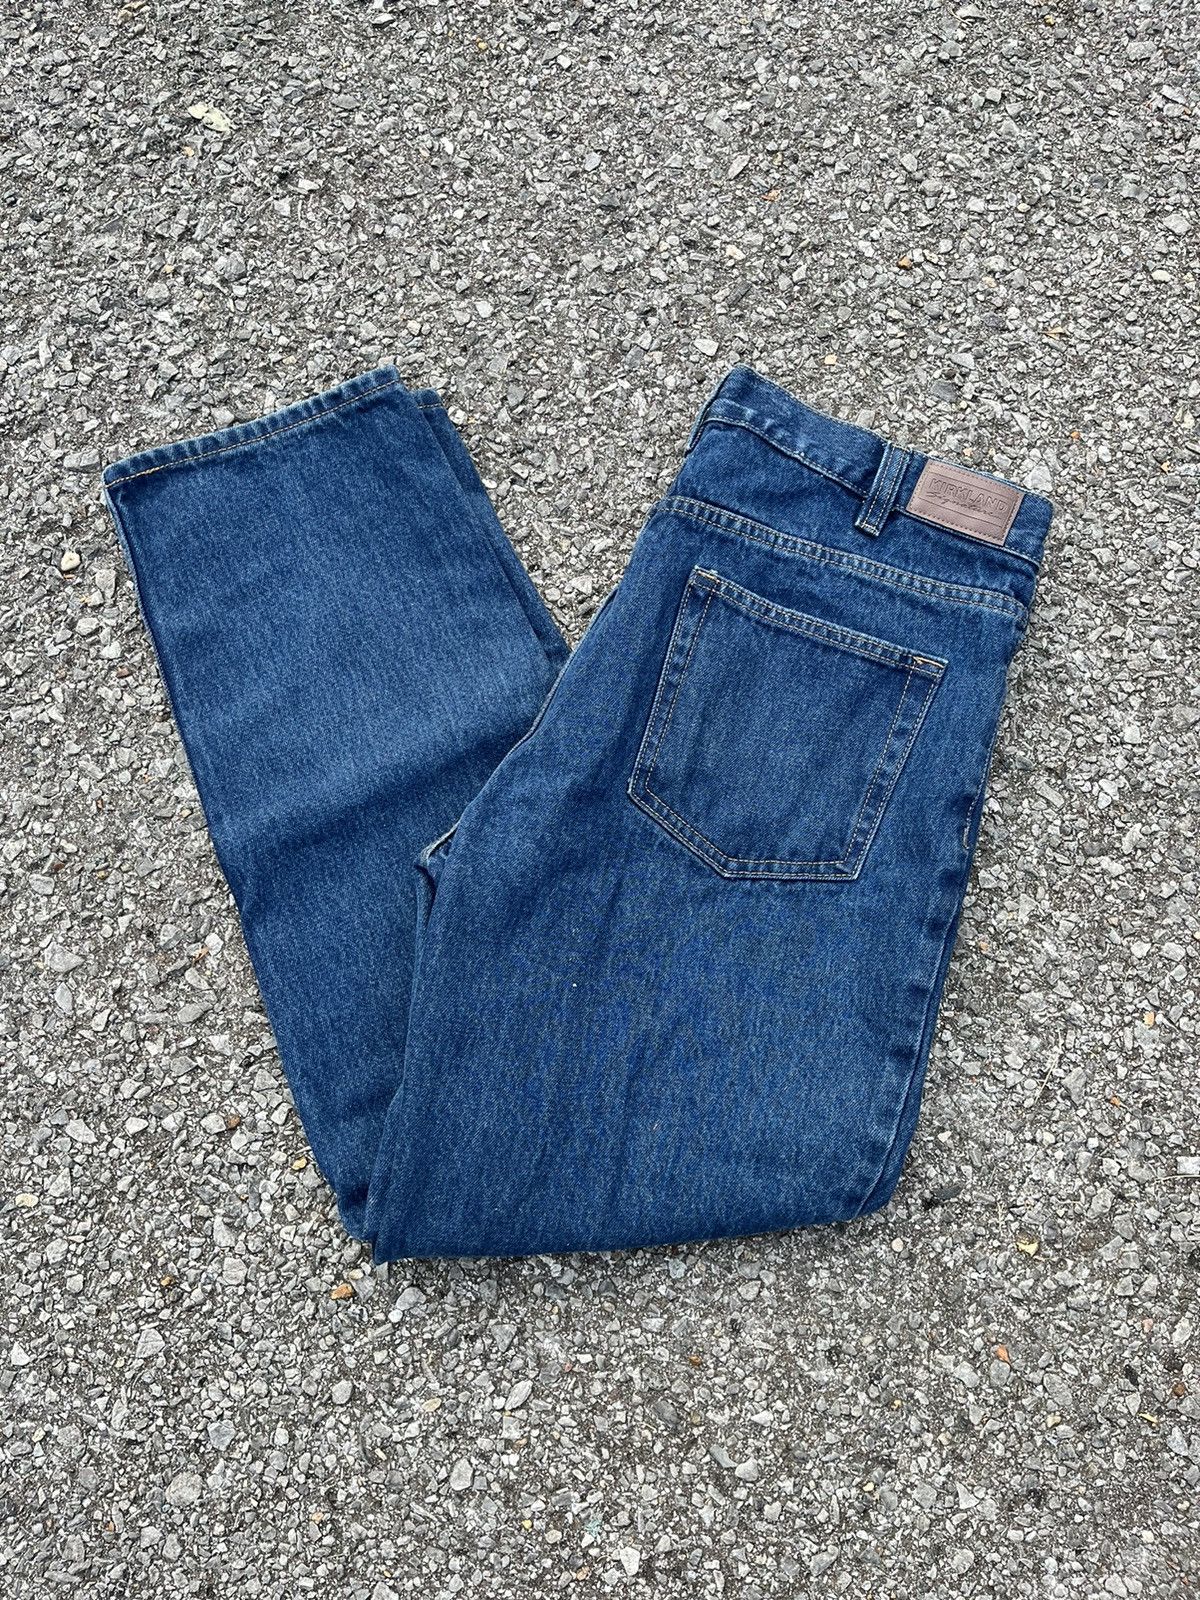 Vintage Kirkland Jeans | Grailed